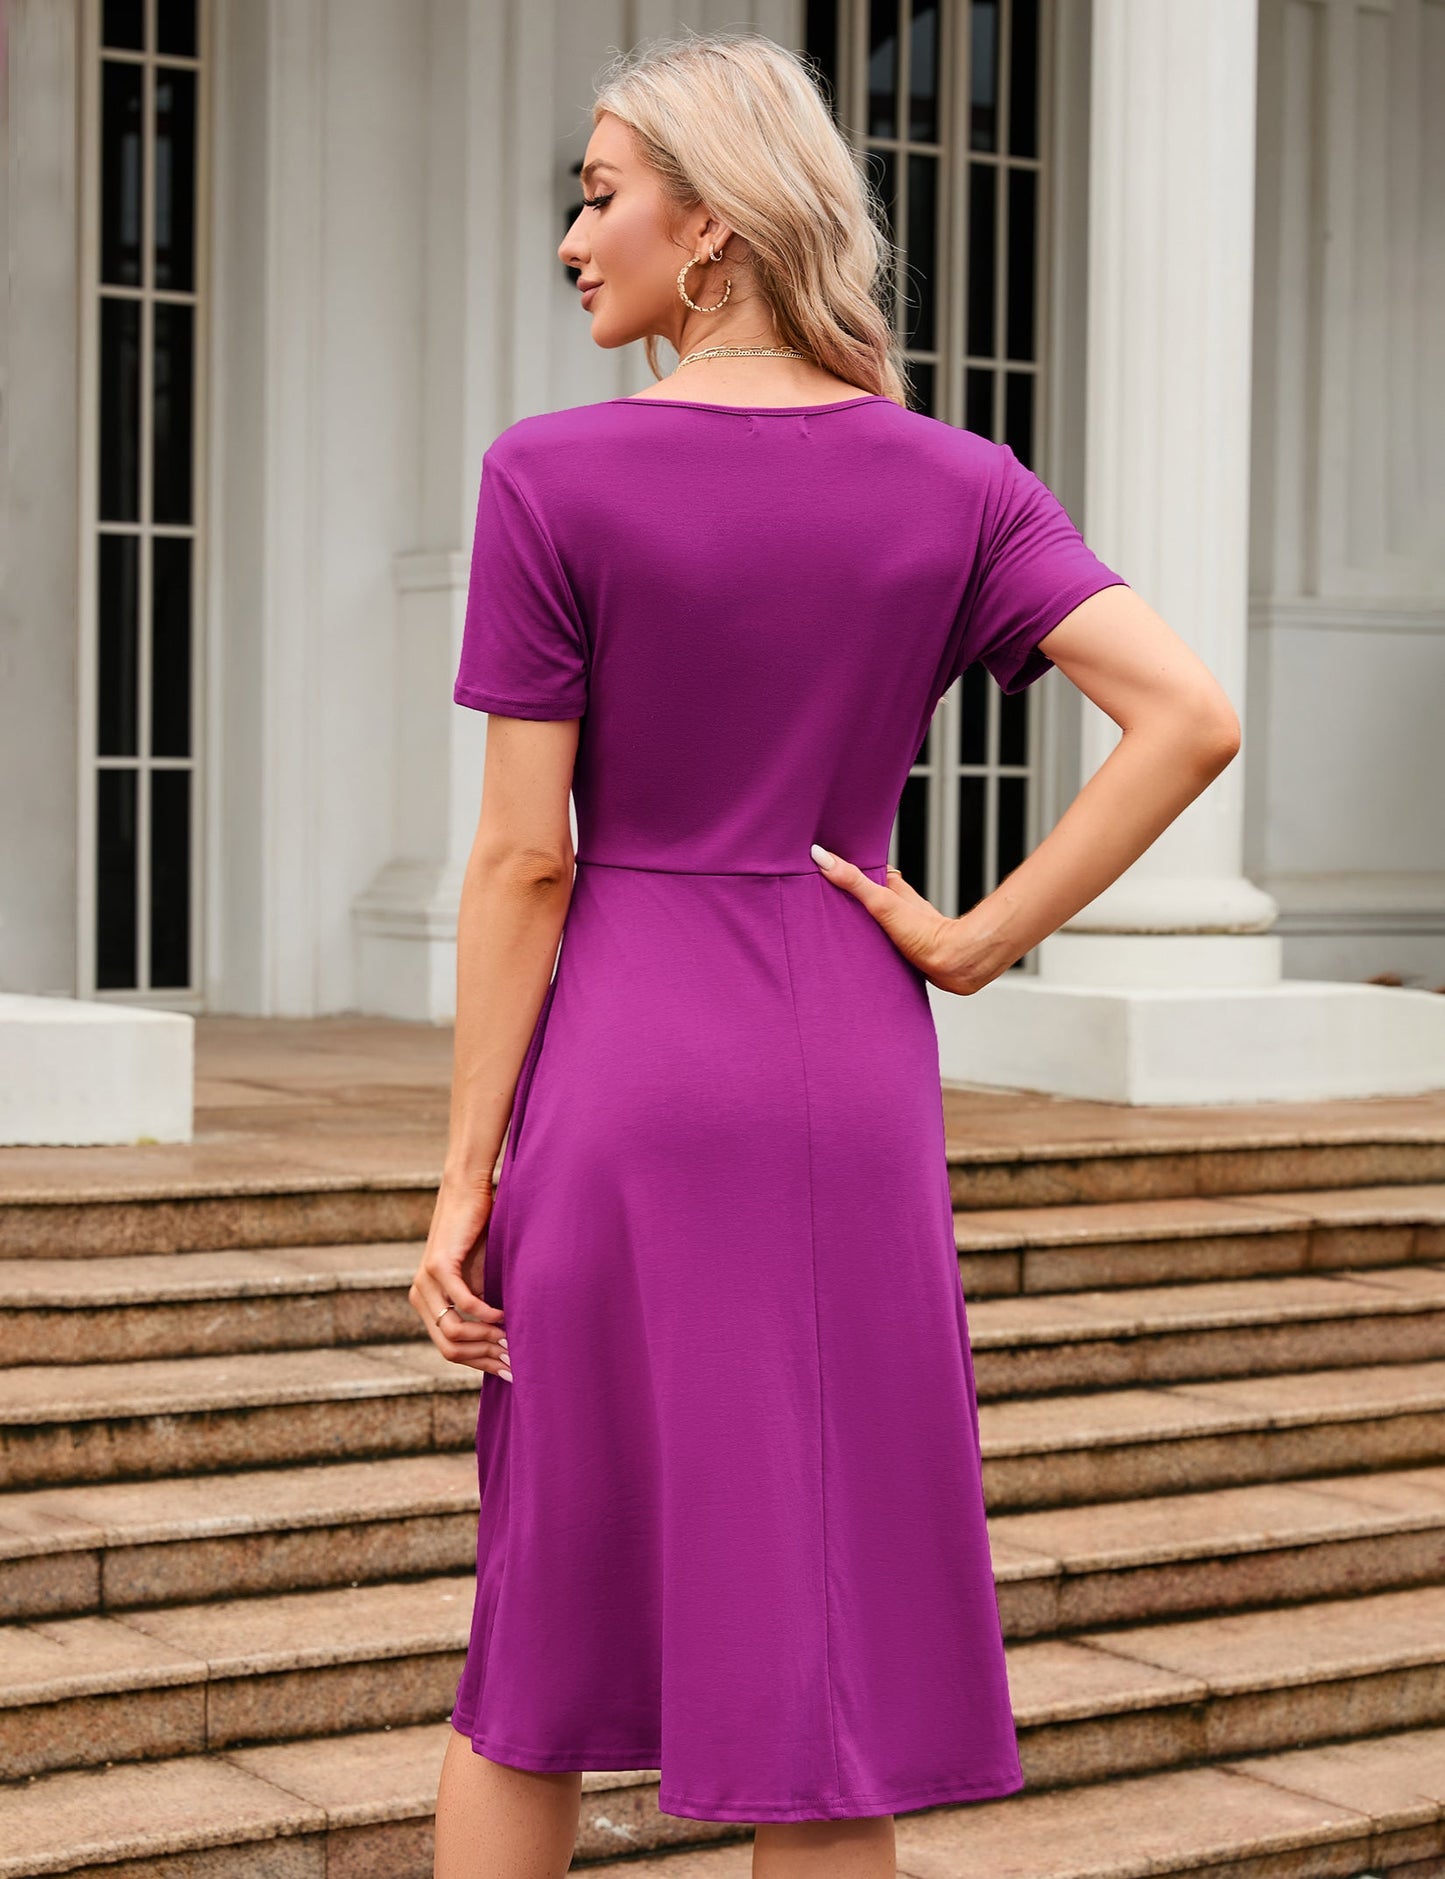 YESFASHION Women's V-neck Casual Dress Purple